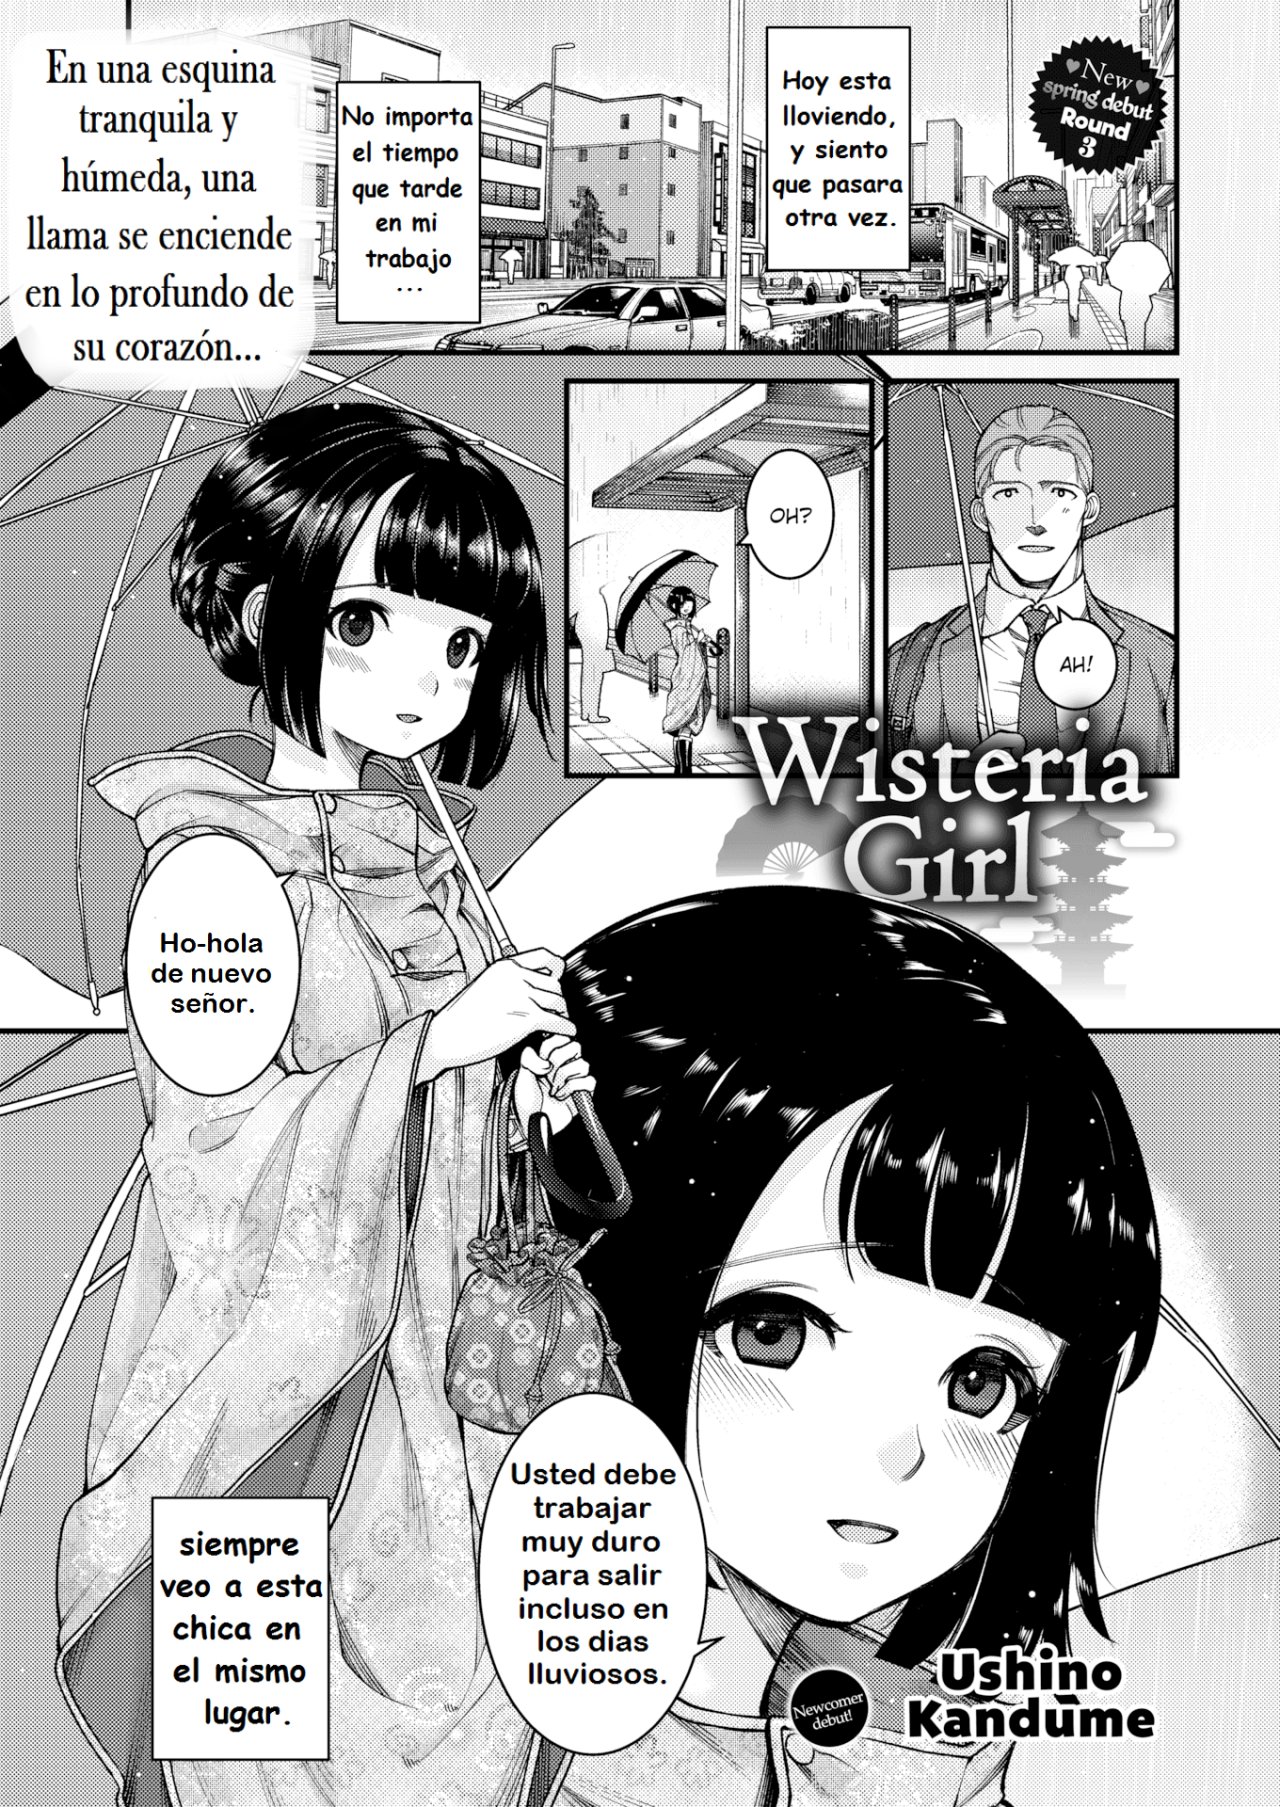 Wisteria Girl - 0